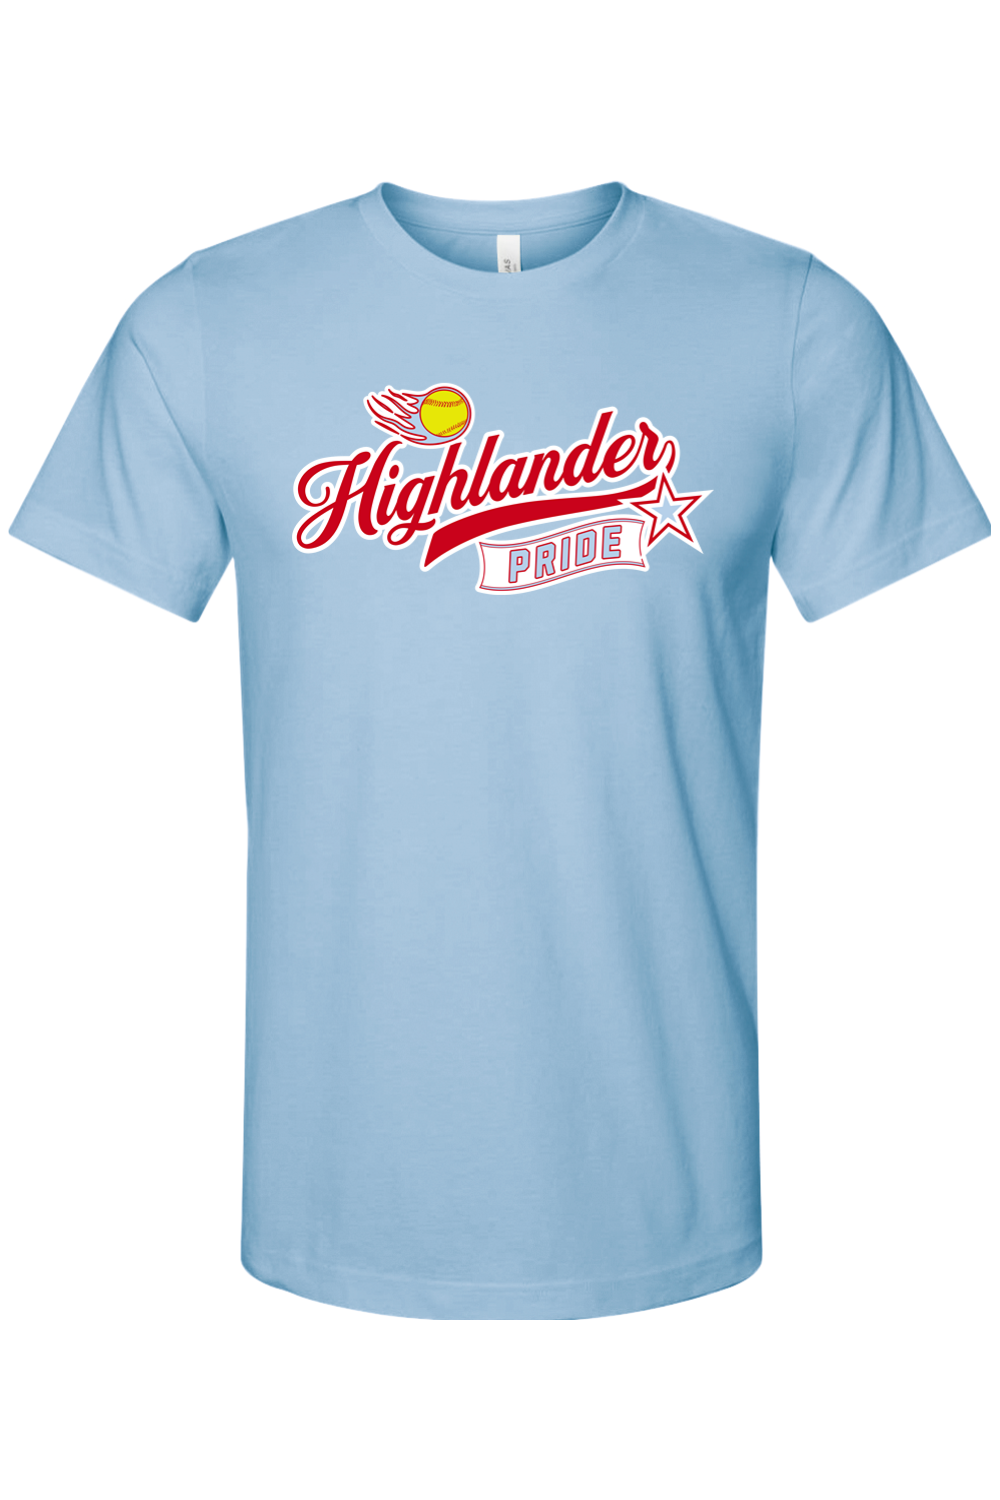 Highlander Pride - 100% Cotton T-Shirt - Yinzylvania